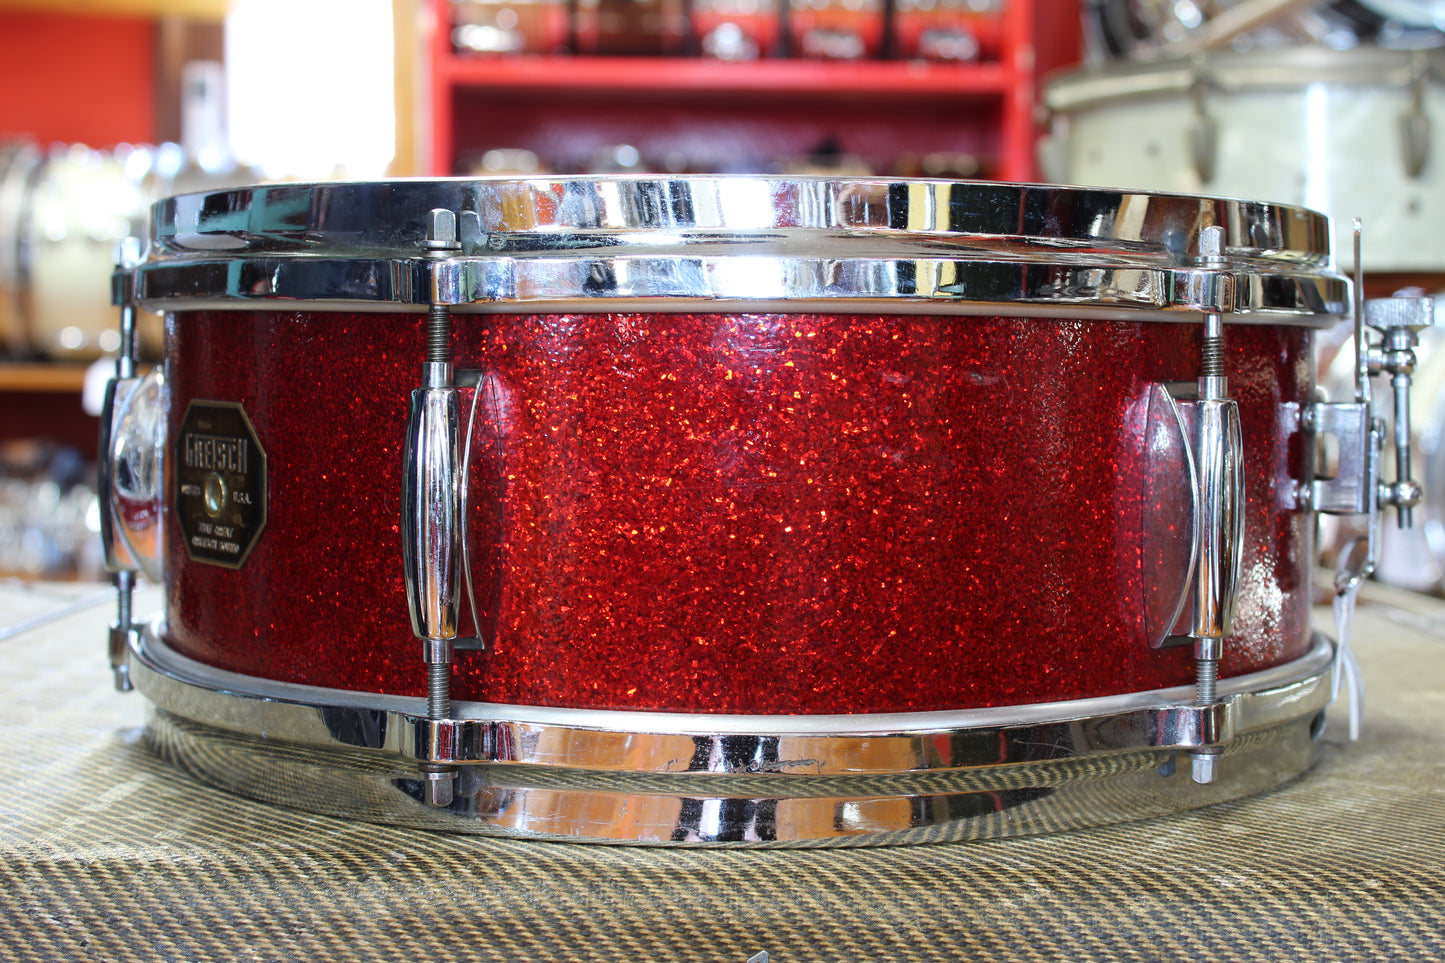 1970 Gretsch Dixieland Snare Drum 5.5x14 in Red Sparkle